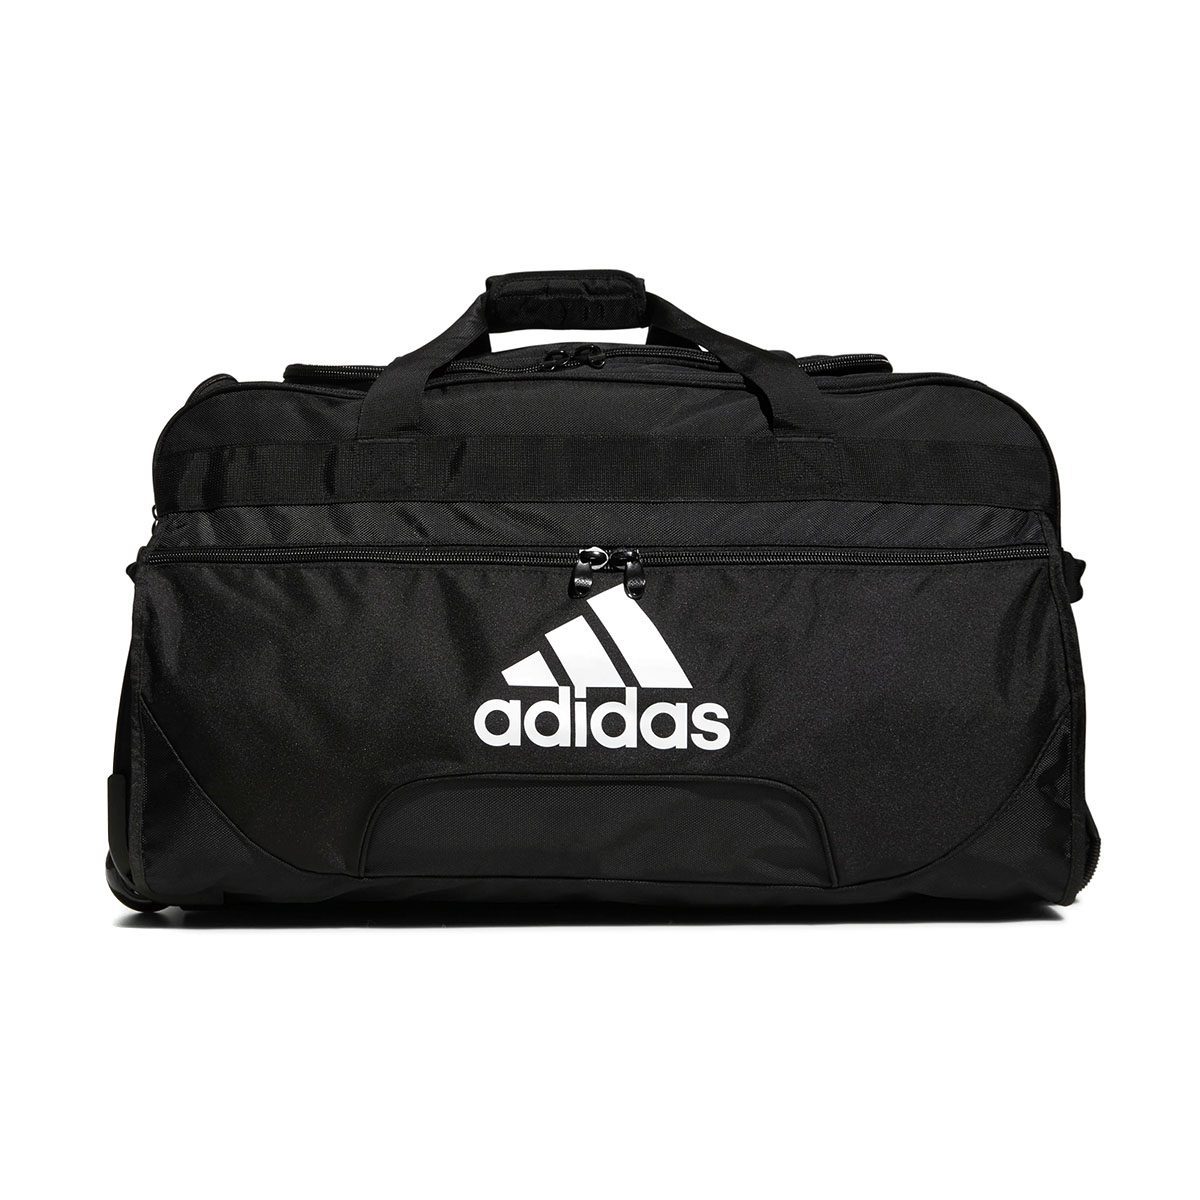 Adidas Team Black Wheel bag 321585 NEW 